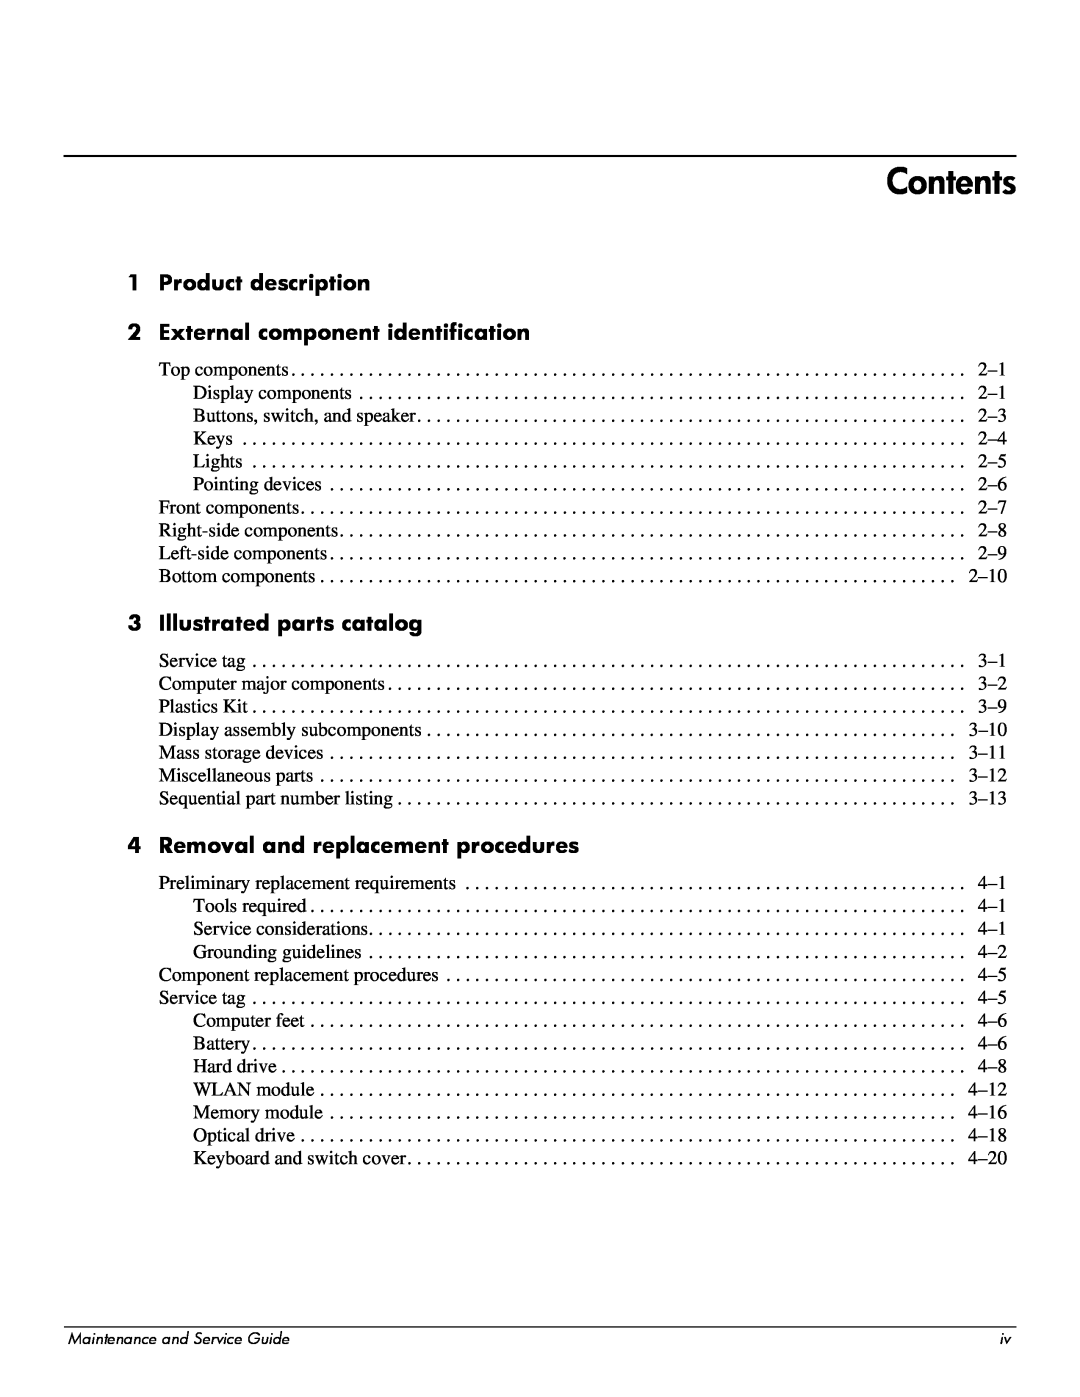 Compaq 510, 511, 515 manual Contents, Product description 2 External component identification, Illustrated parts catalog 